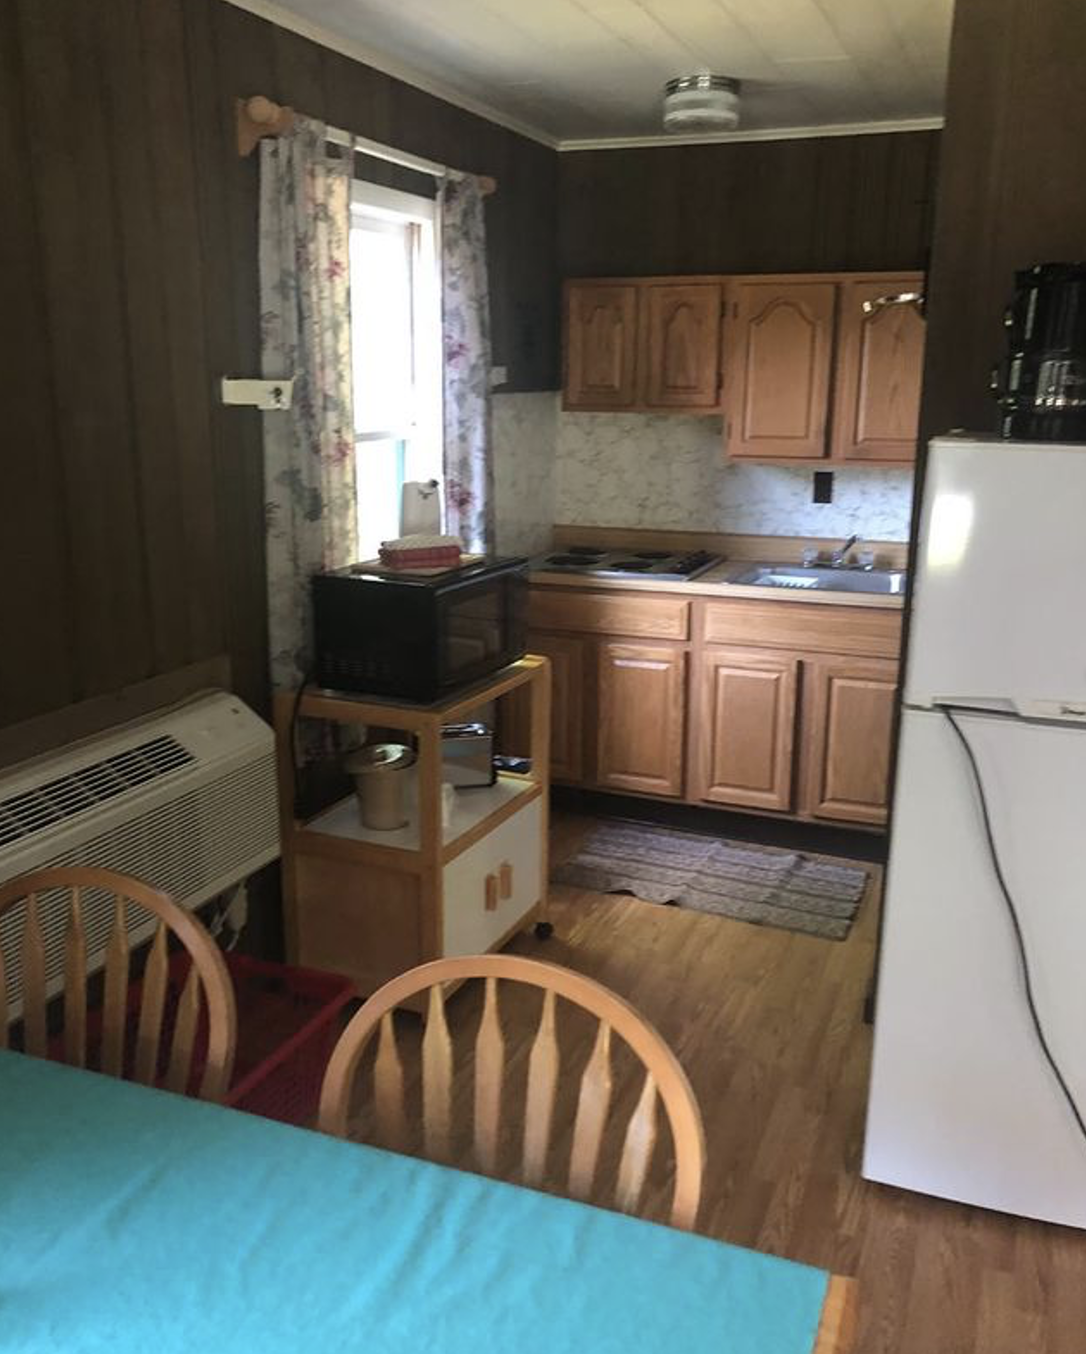 camptown catskills cabin kitchen before 12